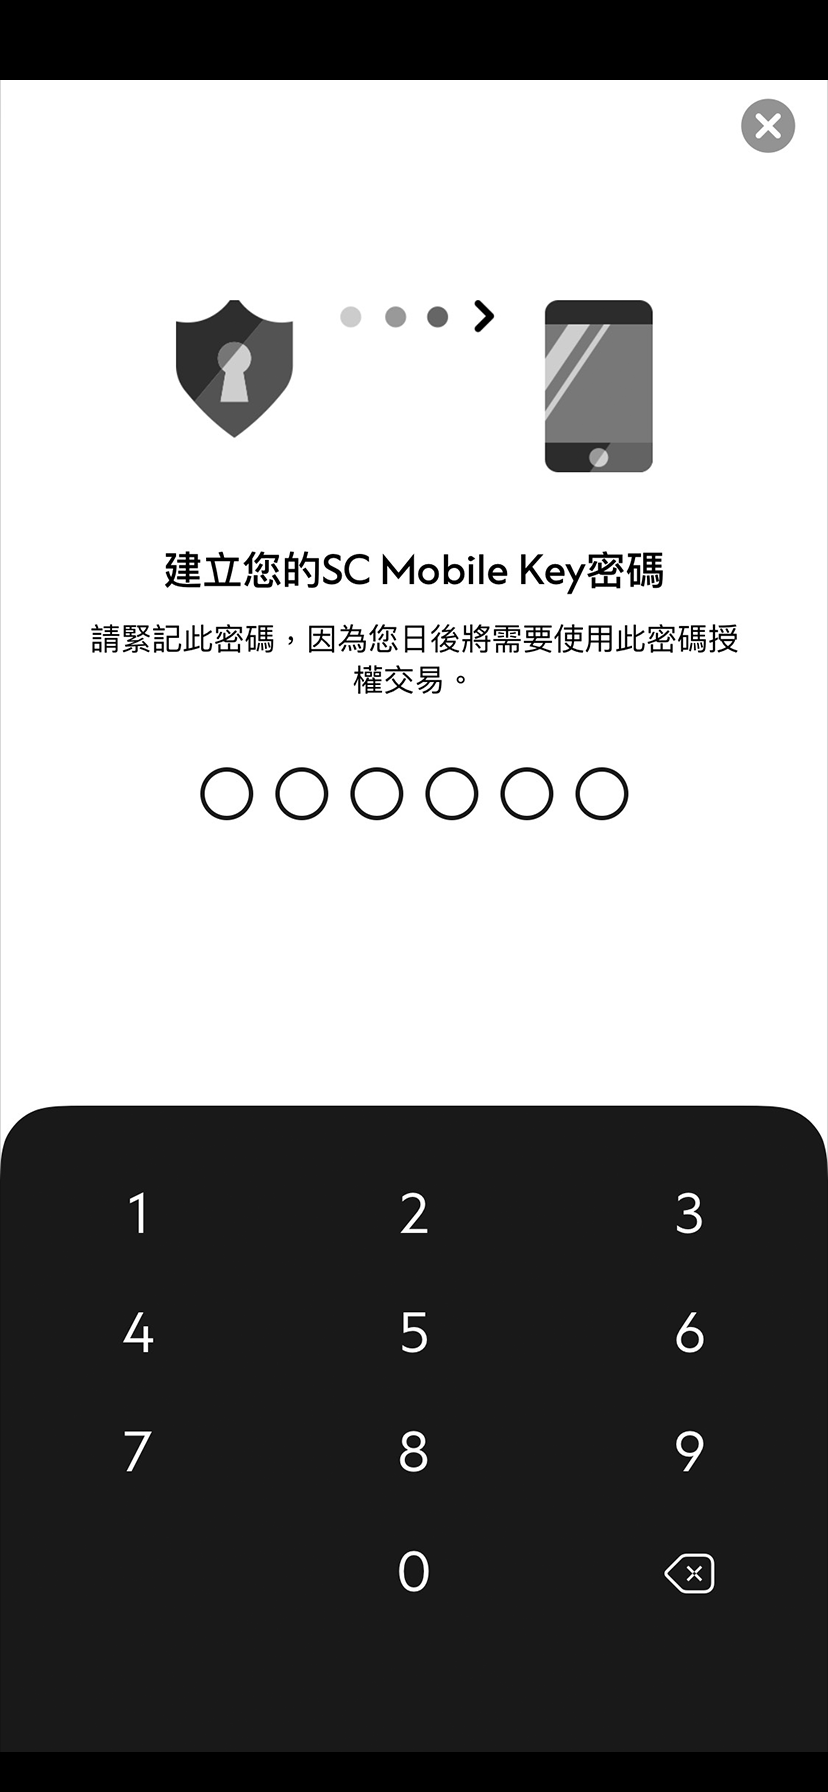 全新SC Mobile App用戶於SC Mobile Key啟動推送訊息服務步驟3